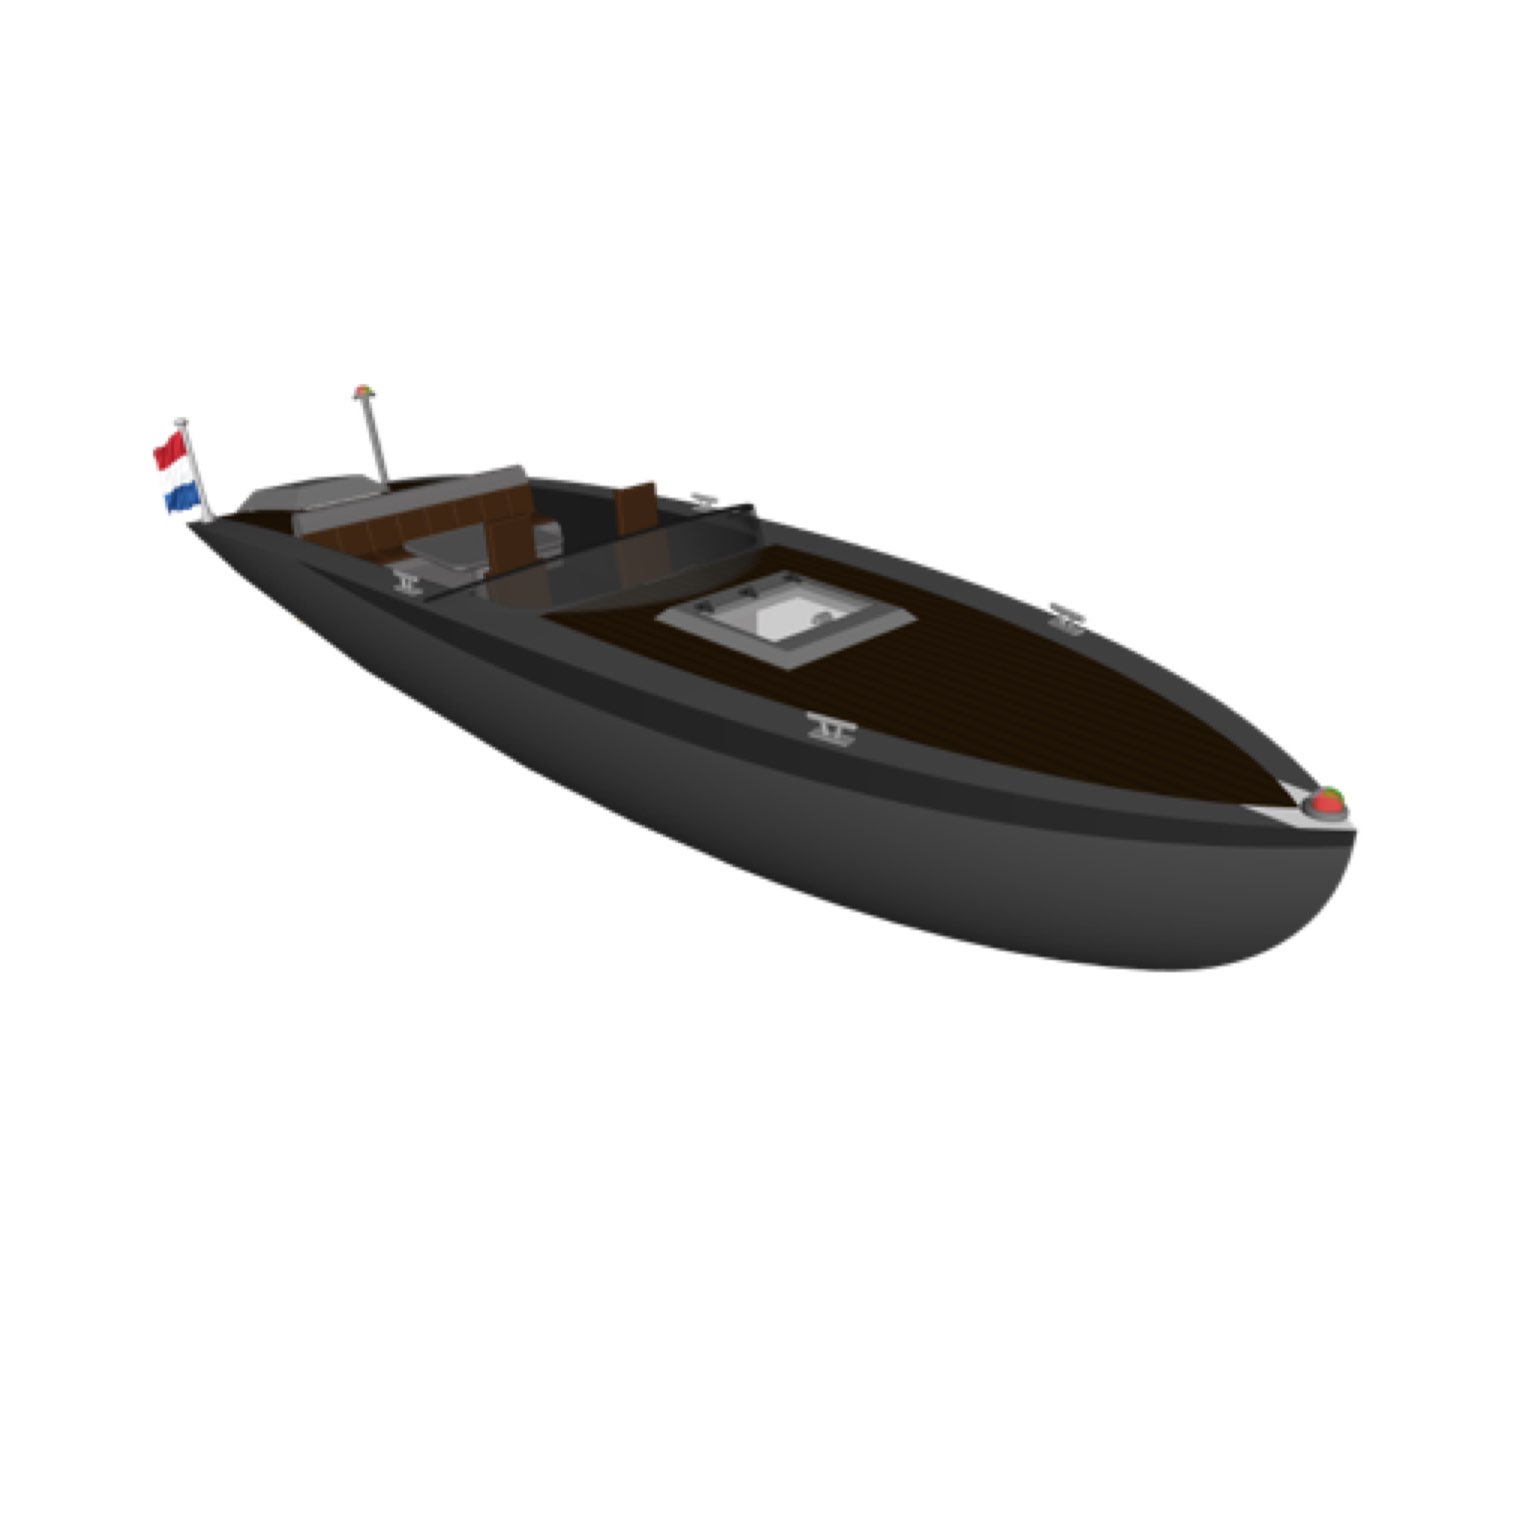 Dutch style boat